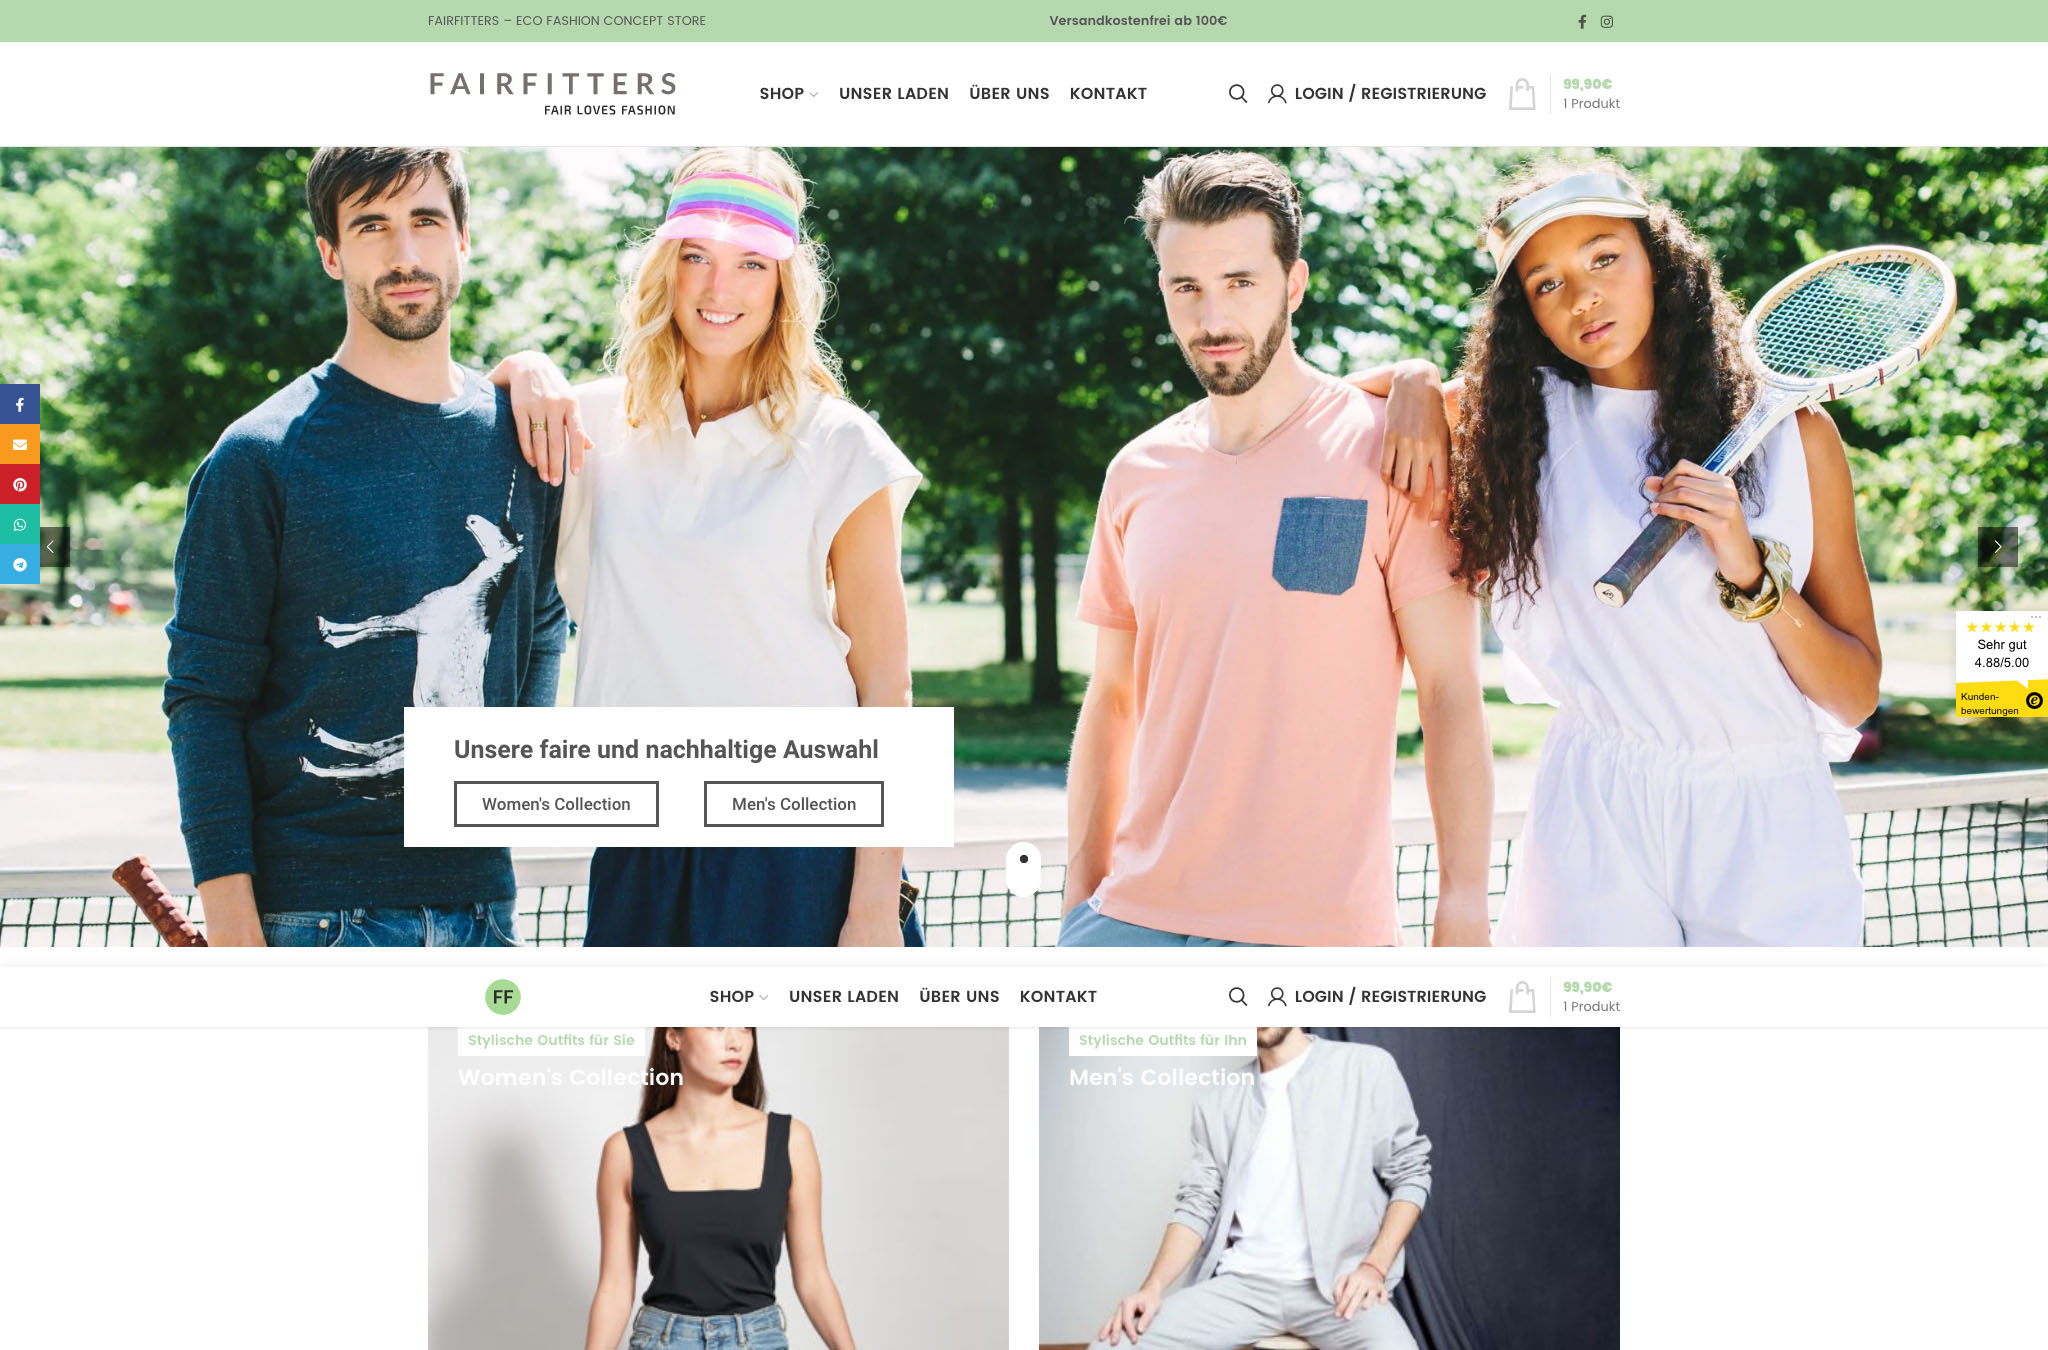 Fairfitters Online Shop Webshop Woocommerce Wordpress Agentur Koeln Marketingagentur